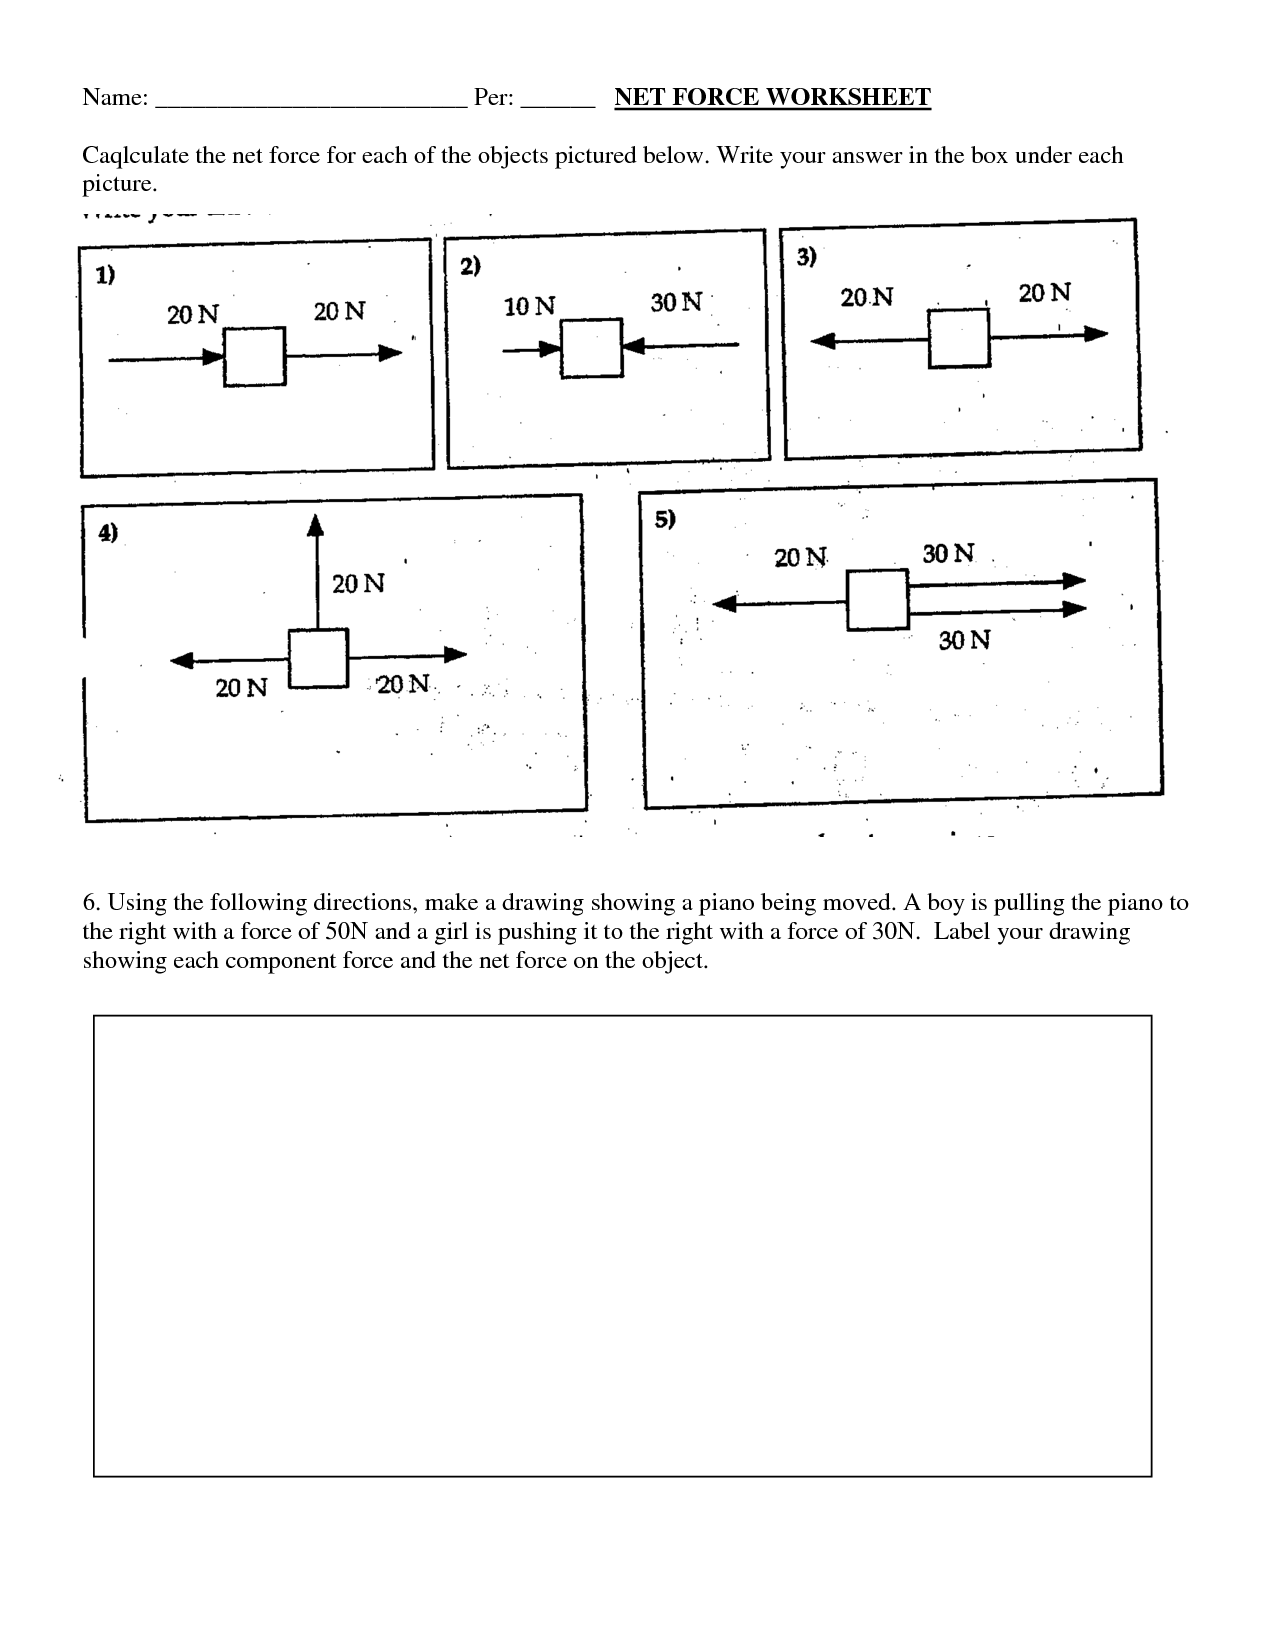 Net Force Diagram Worksheet Answers Image